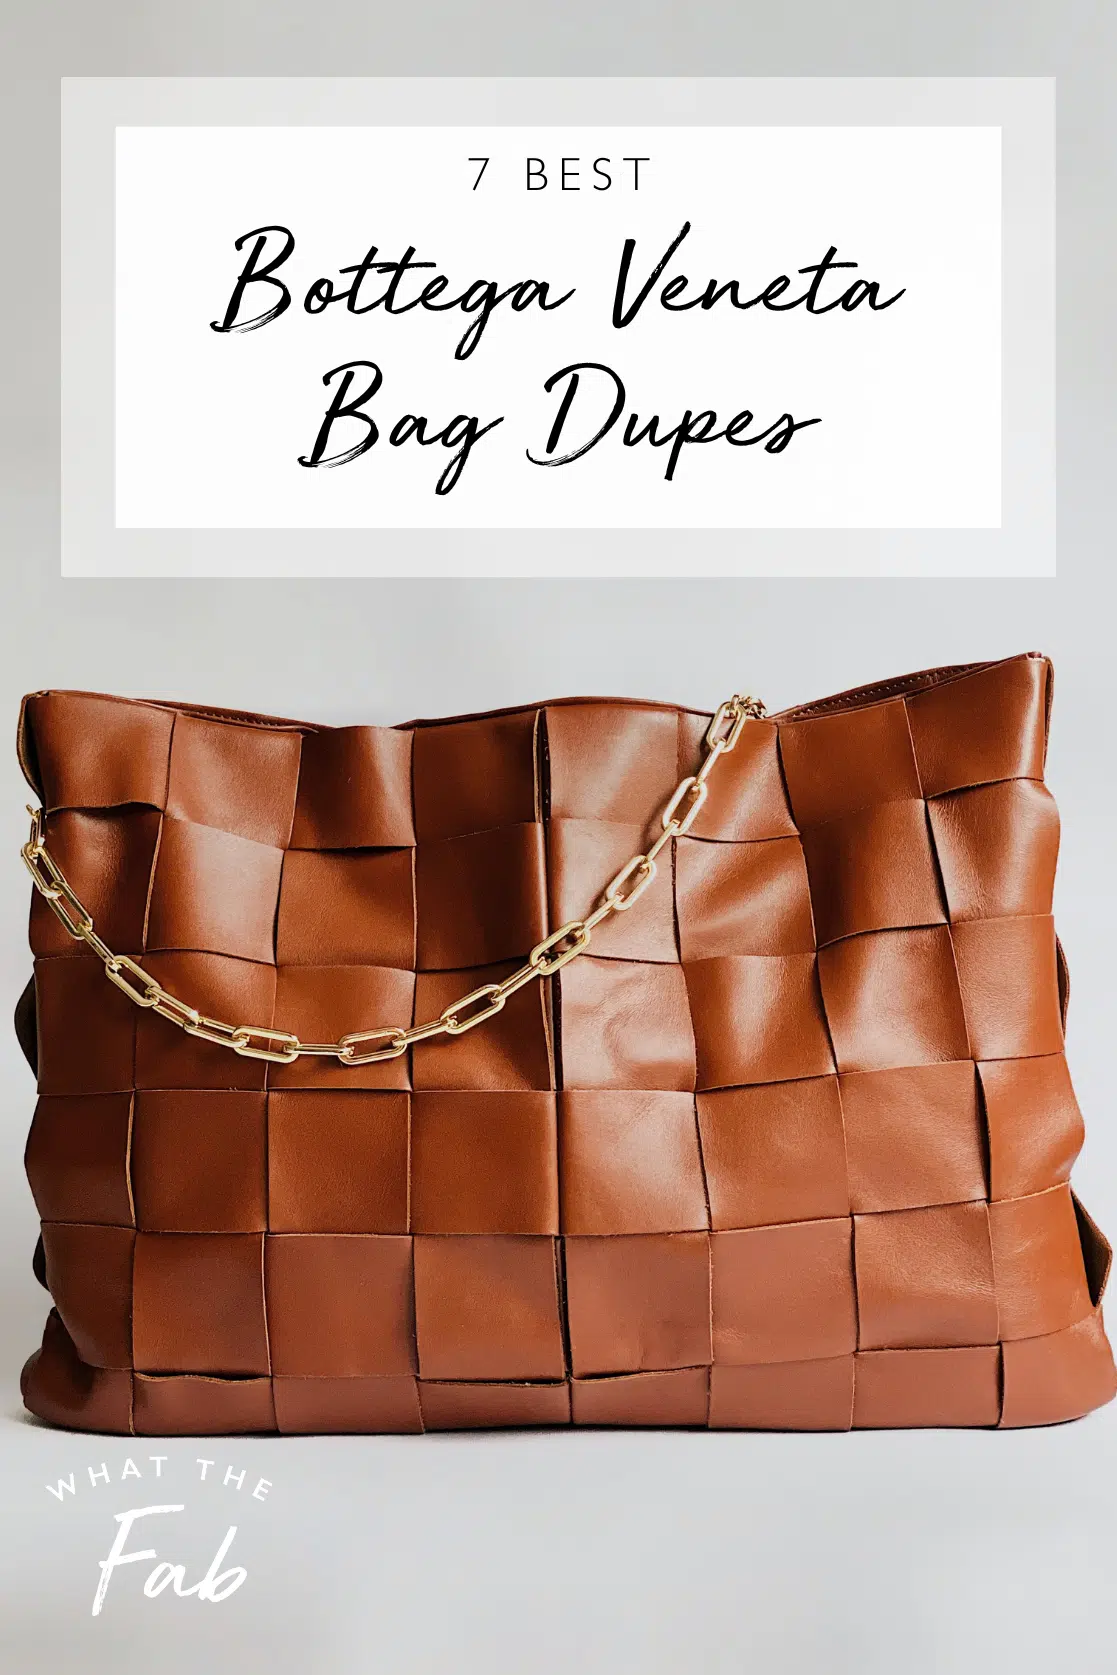 7 BEST Bottega Veneta Bag Dupes  Get The Iconic Look For Less